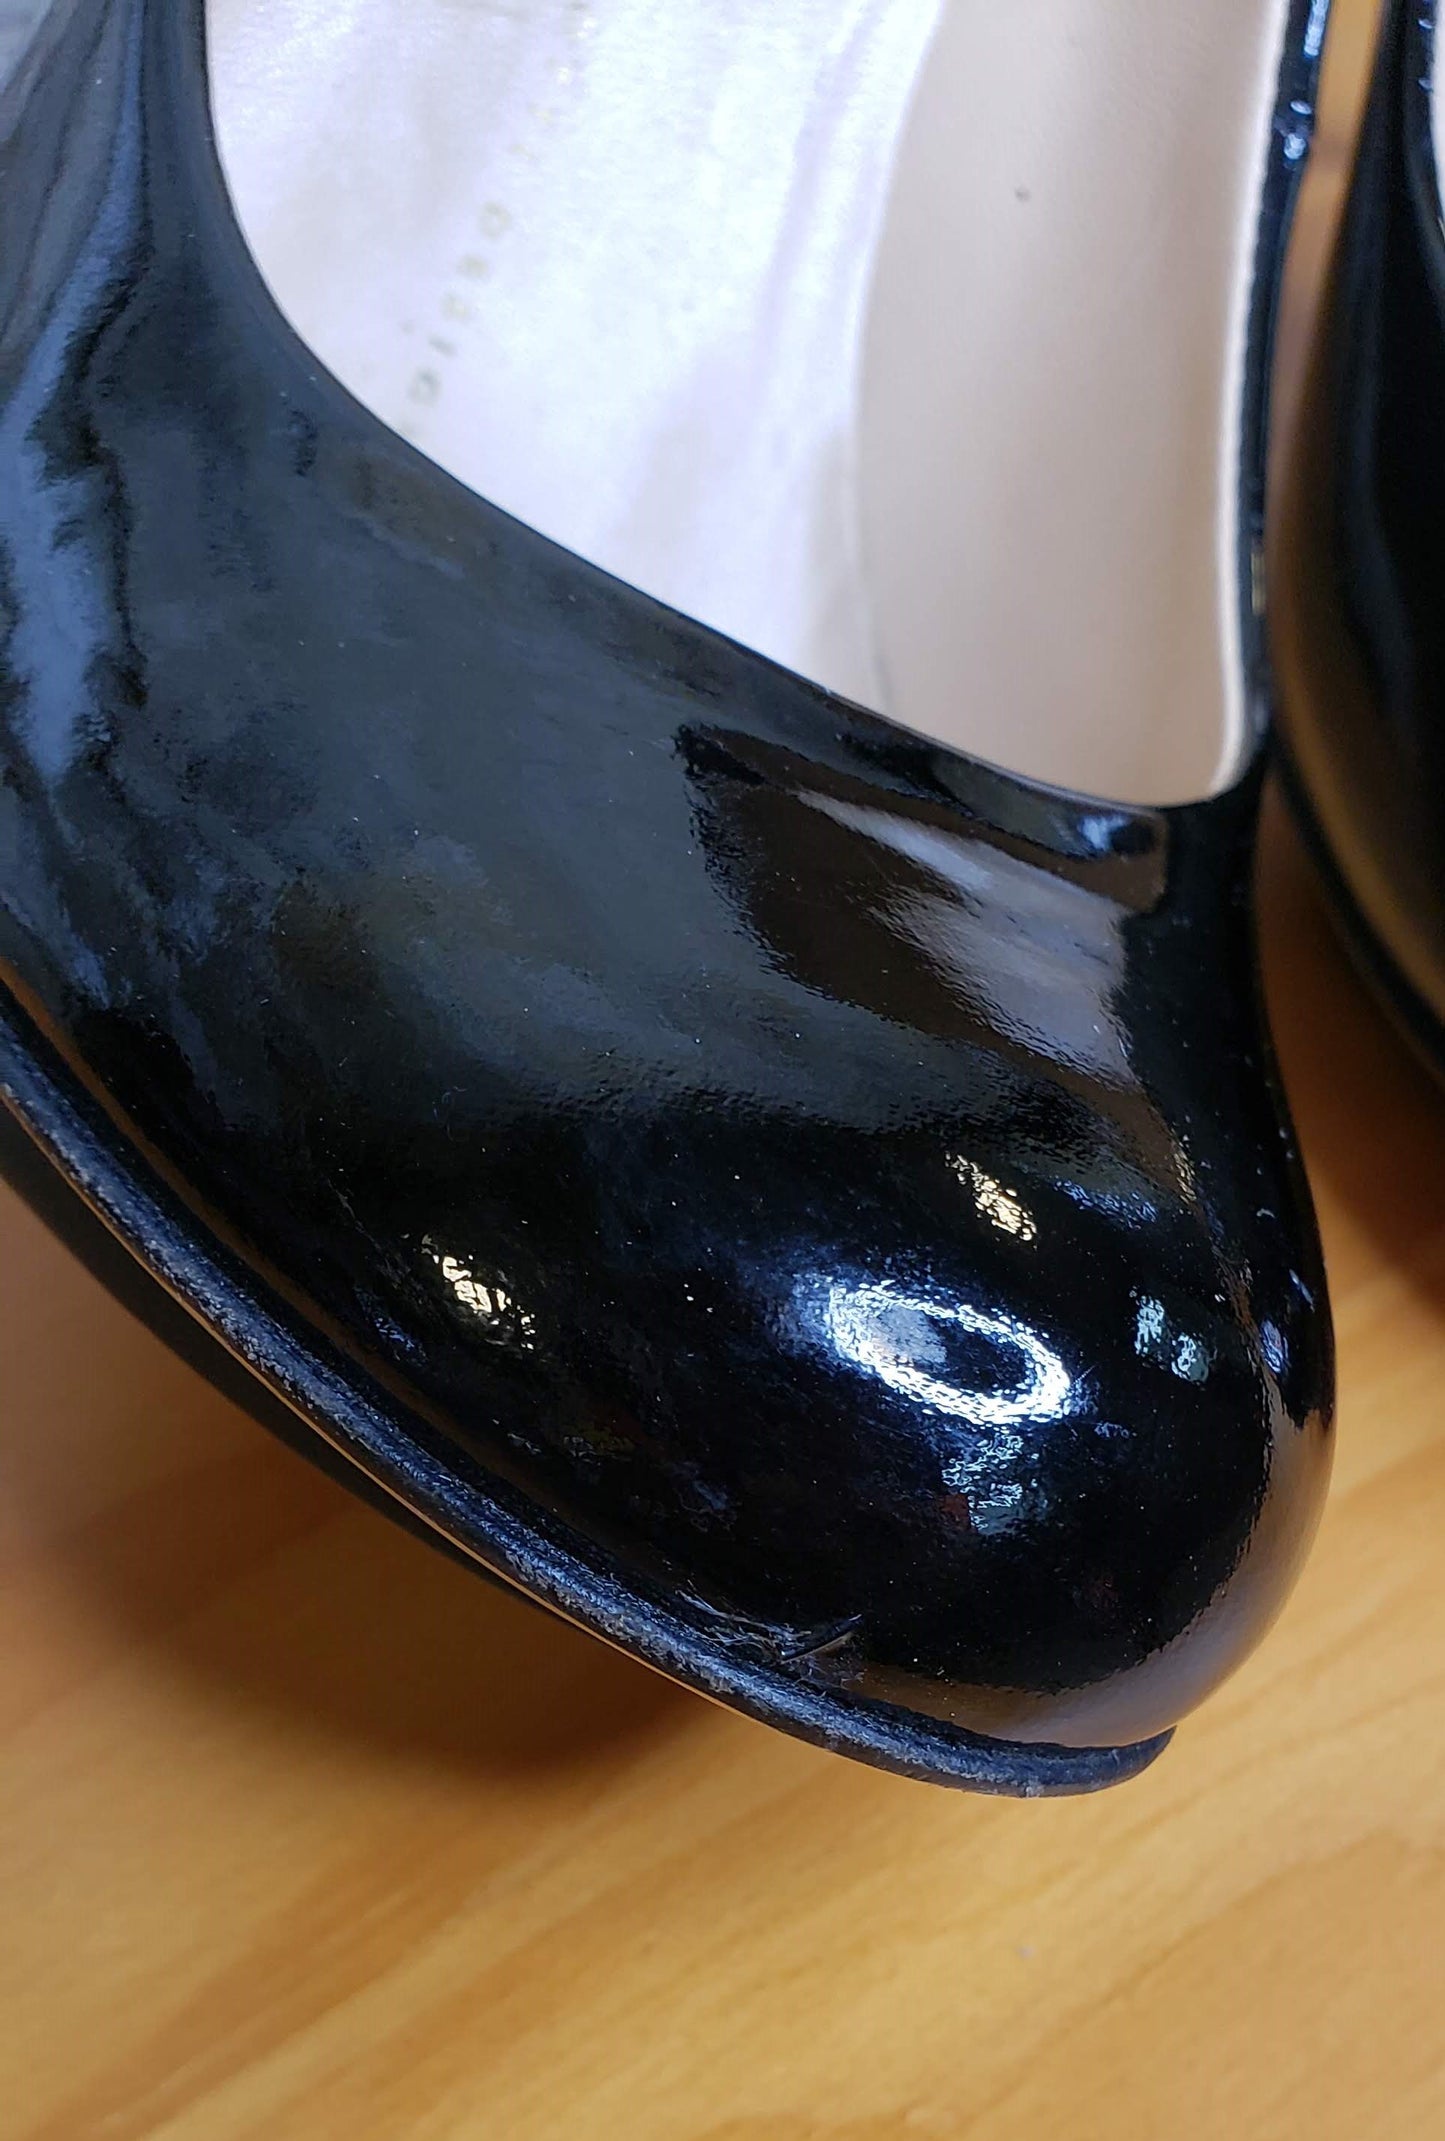 Giuseppe Zanotti Black Patent Leather Heels Sz 38 1/2